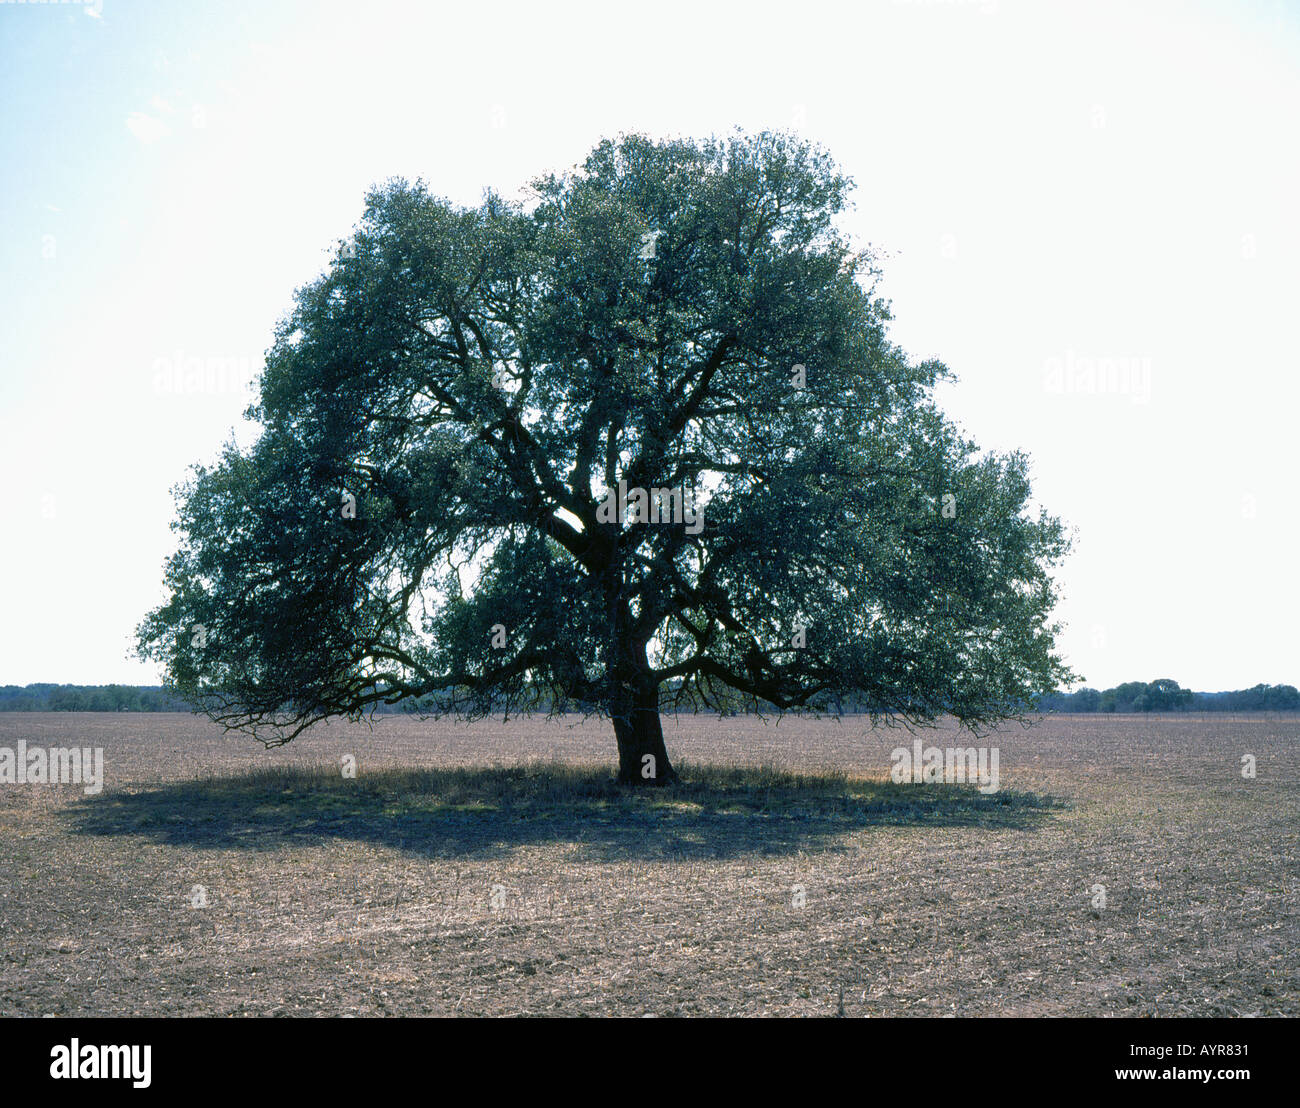 solitair oak tree on field Texas USA. Photo by Willy Matheisl Stock Photo